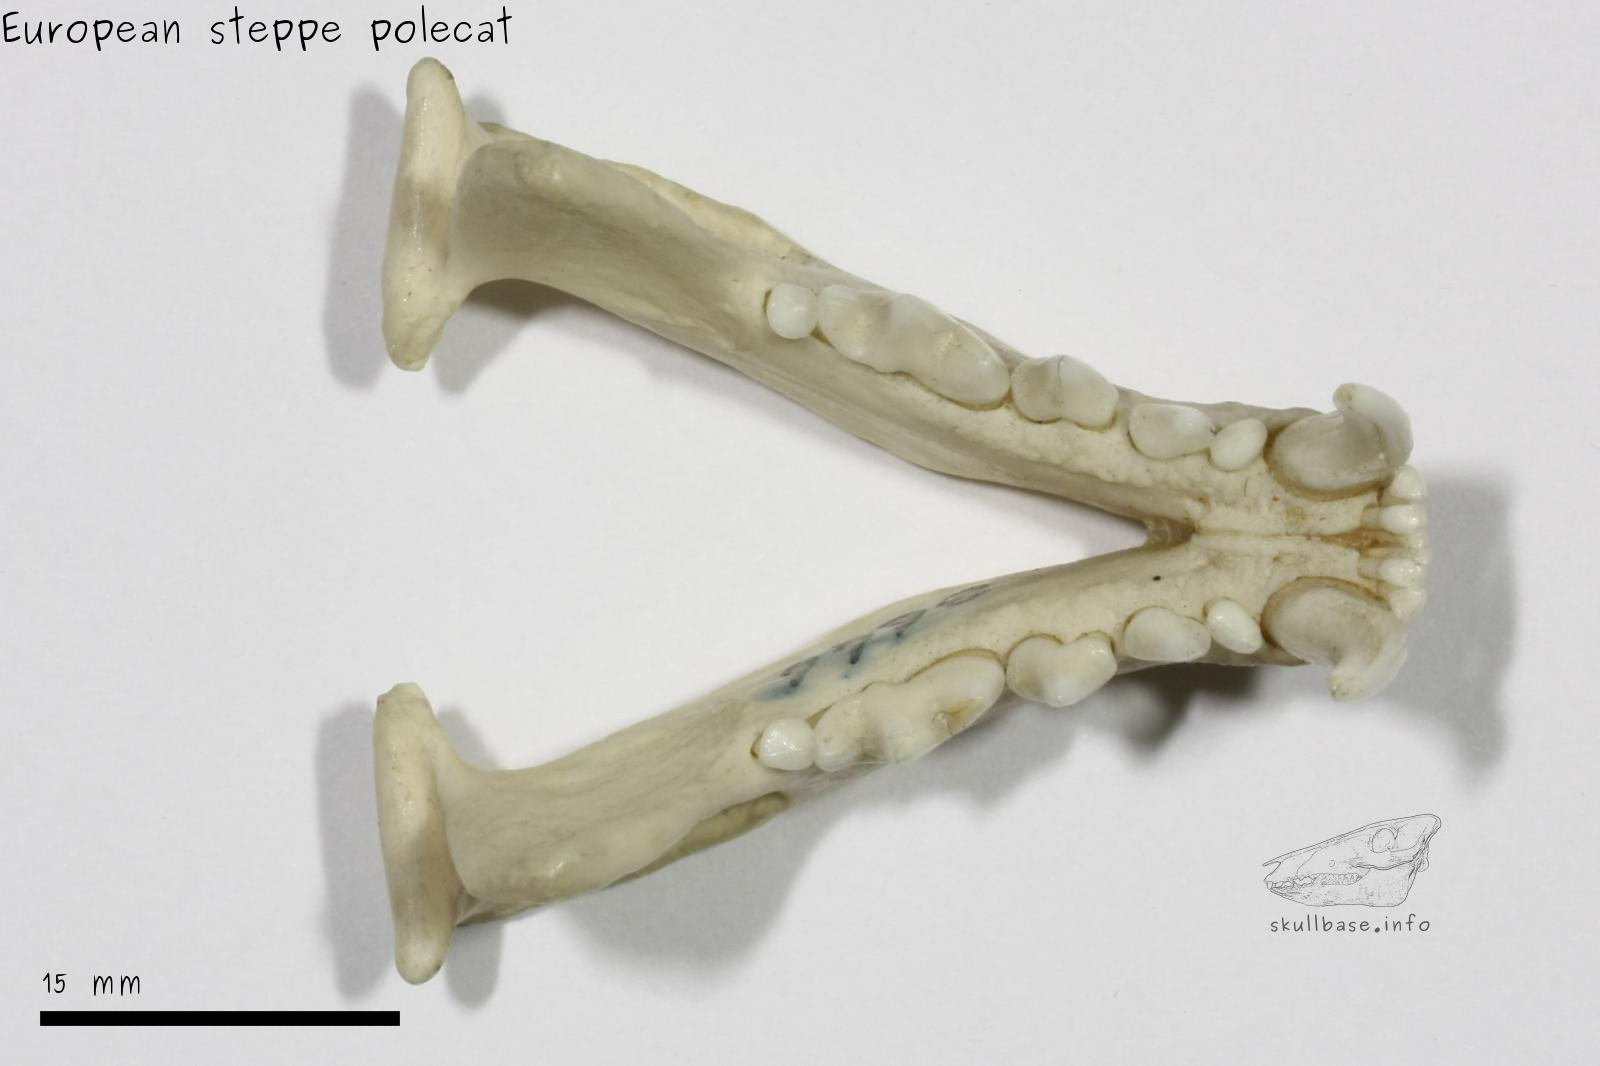 European steppe polecat (Mustela eversmanii hungarica) jaw